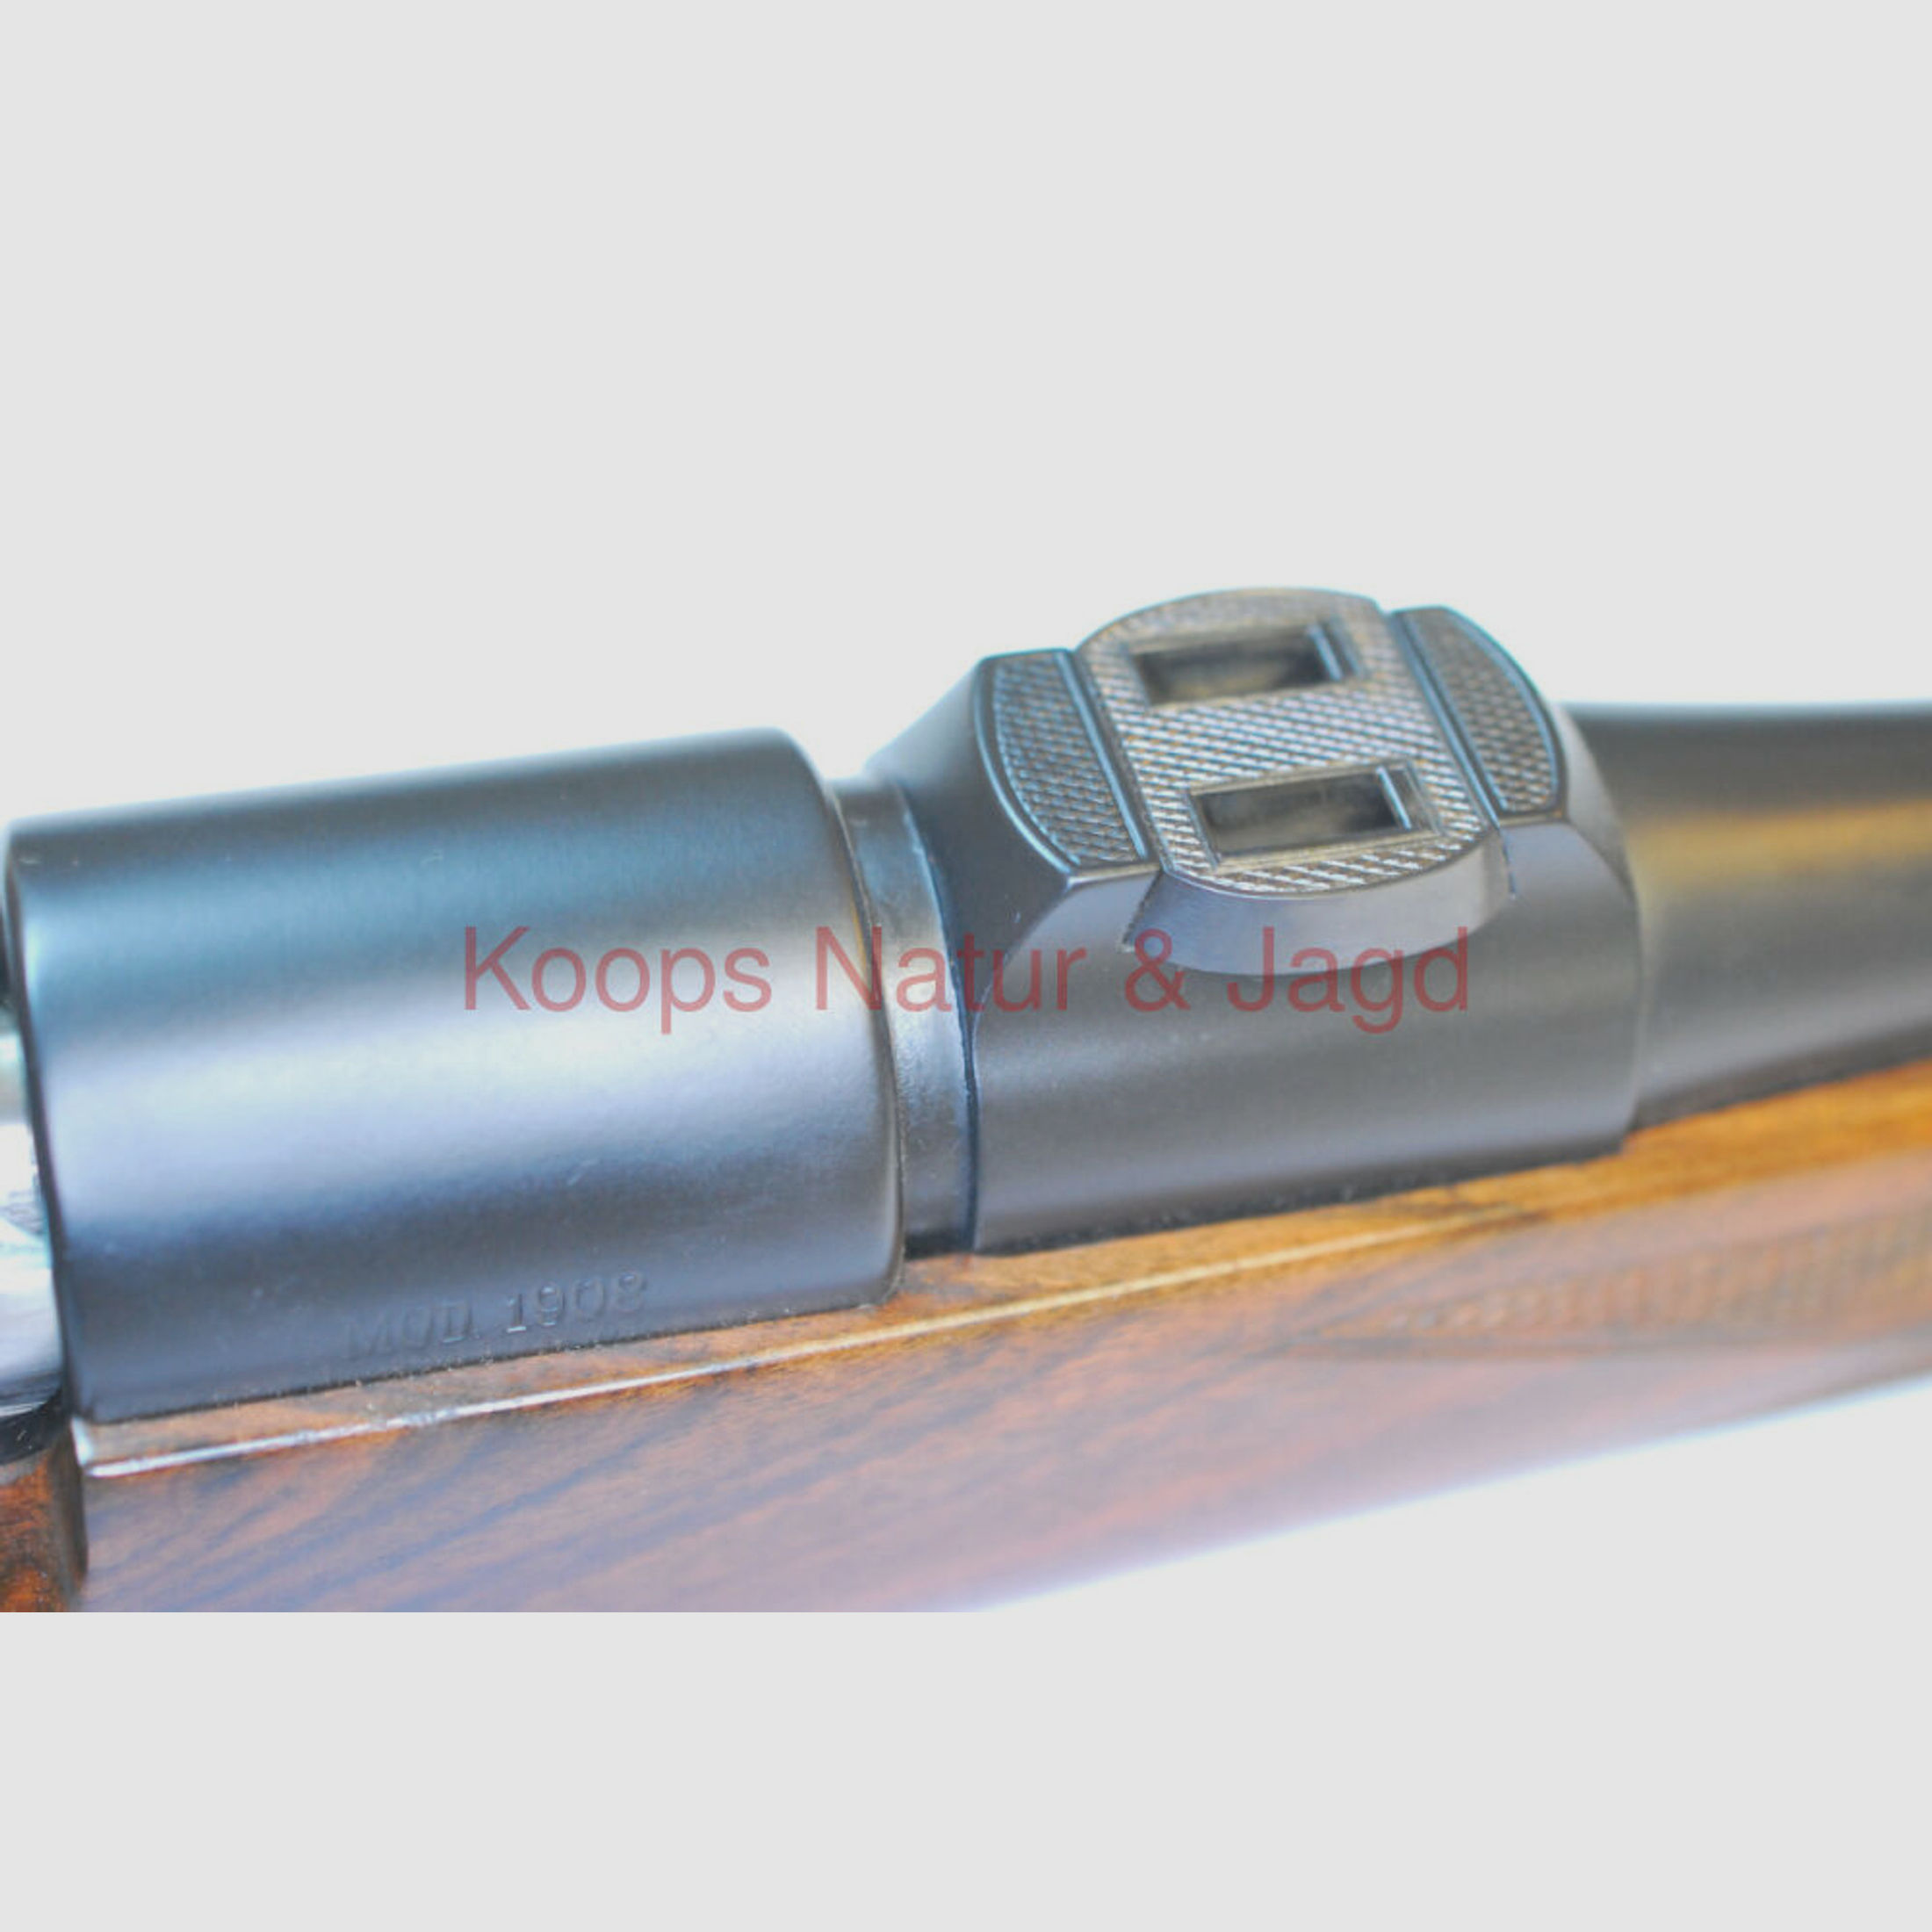 Klaus Koops	 Mauser 98